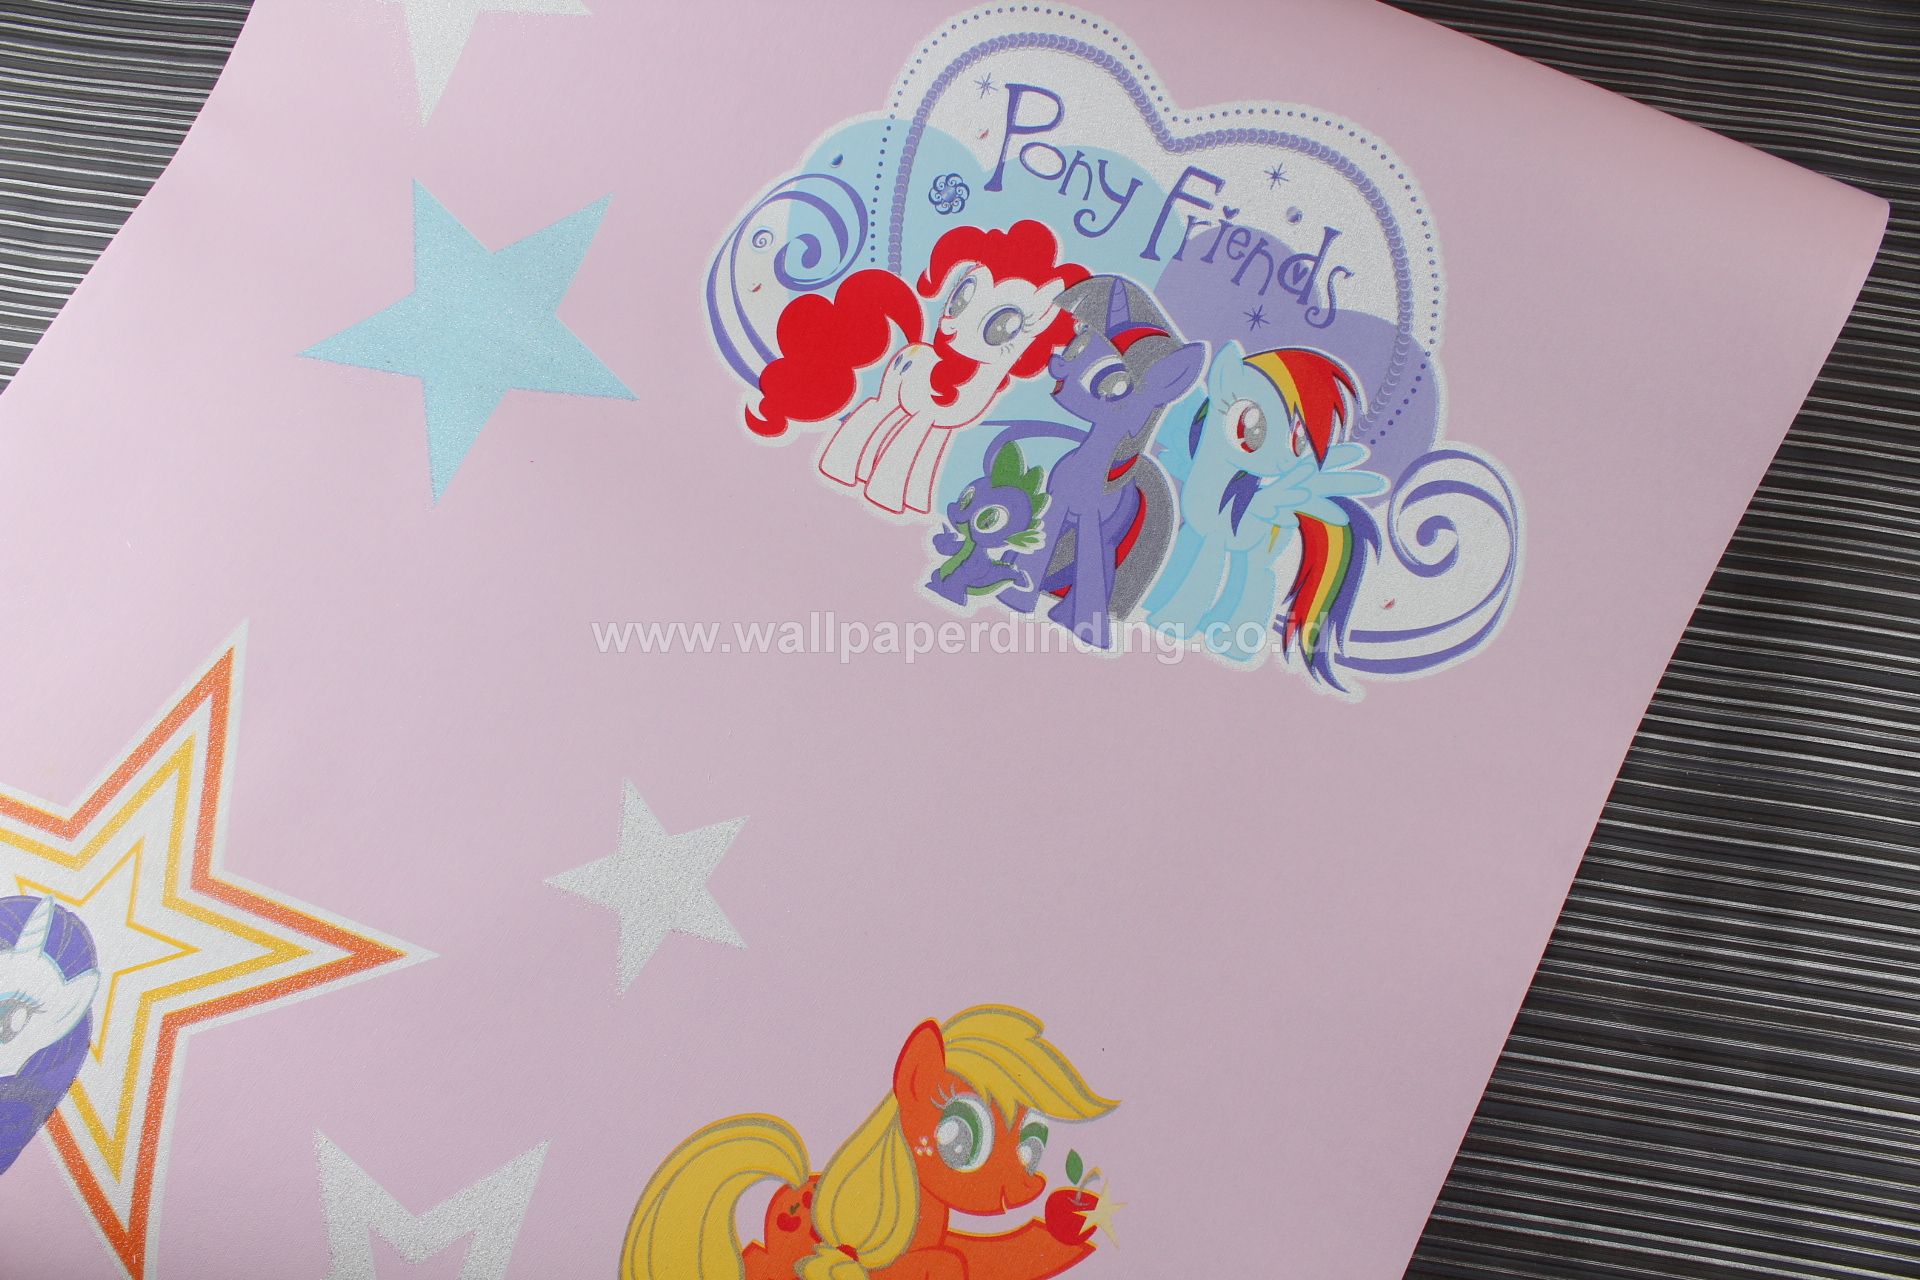 Wallpaper Dinding Anak Pony Pink 4421-2 - Dinding Anak - HD Wallpaper 